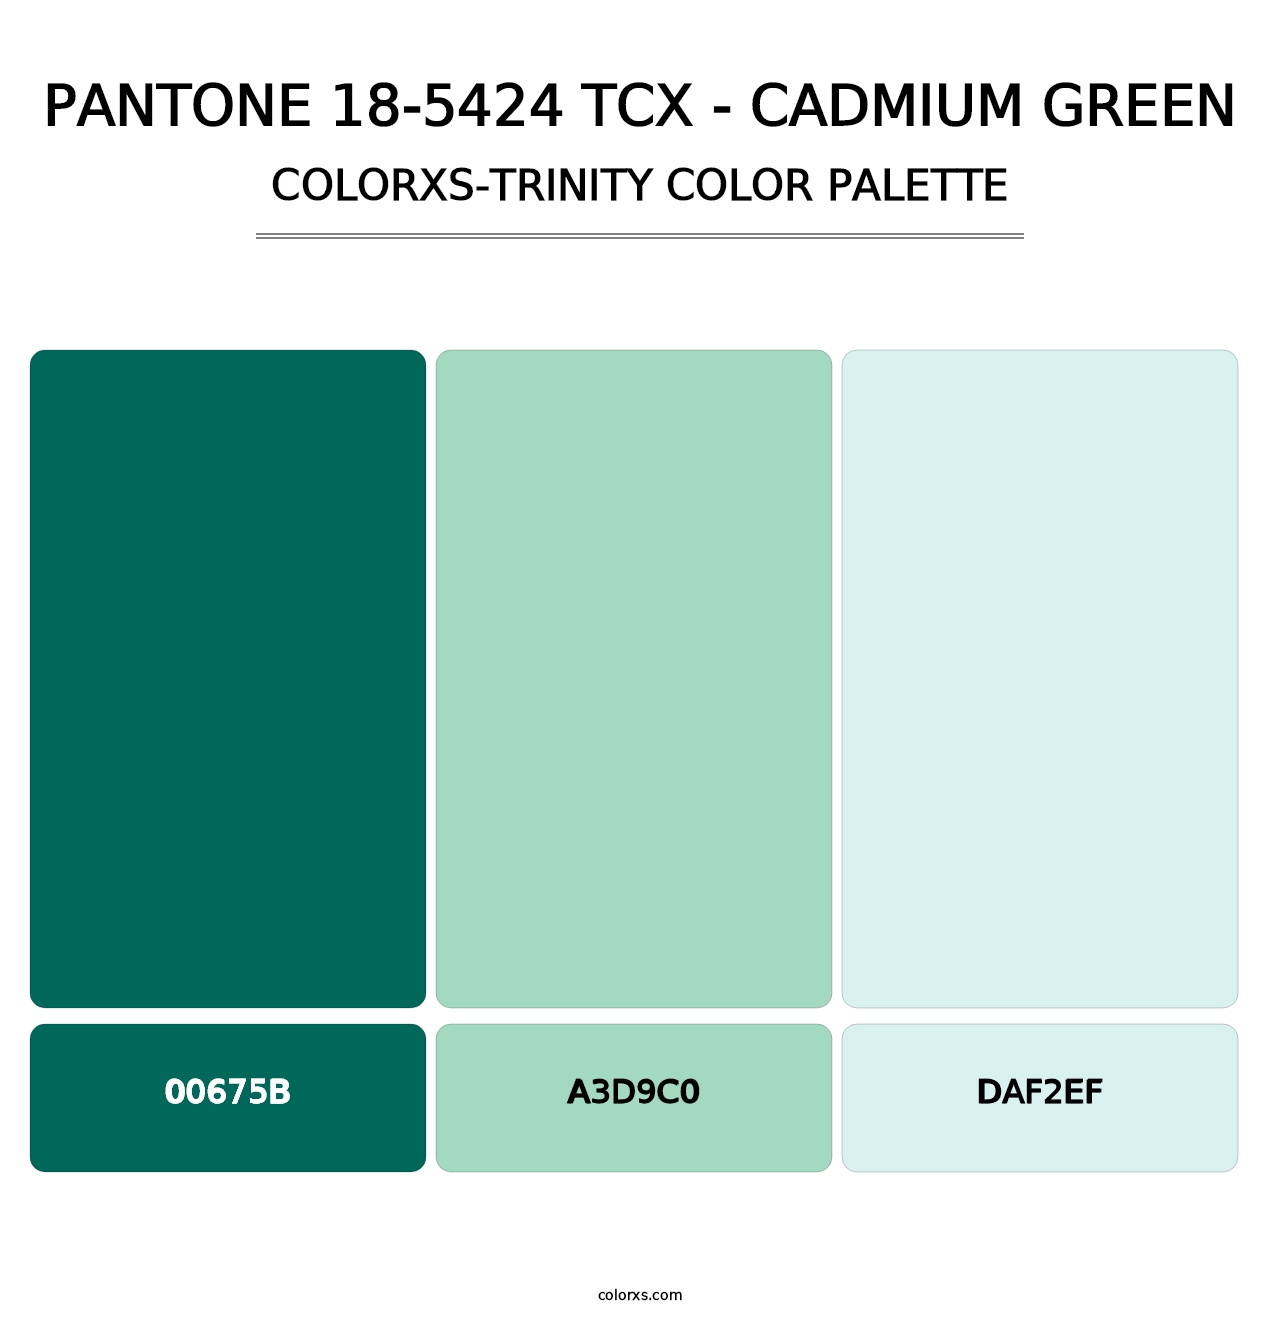 PANTONE 18-5424 TCX - Cadmium Green - Colorxs Trinity Palette